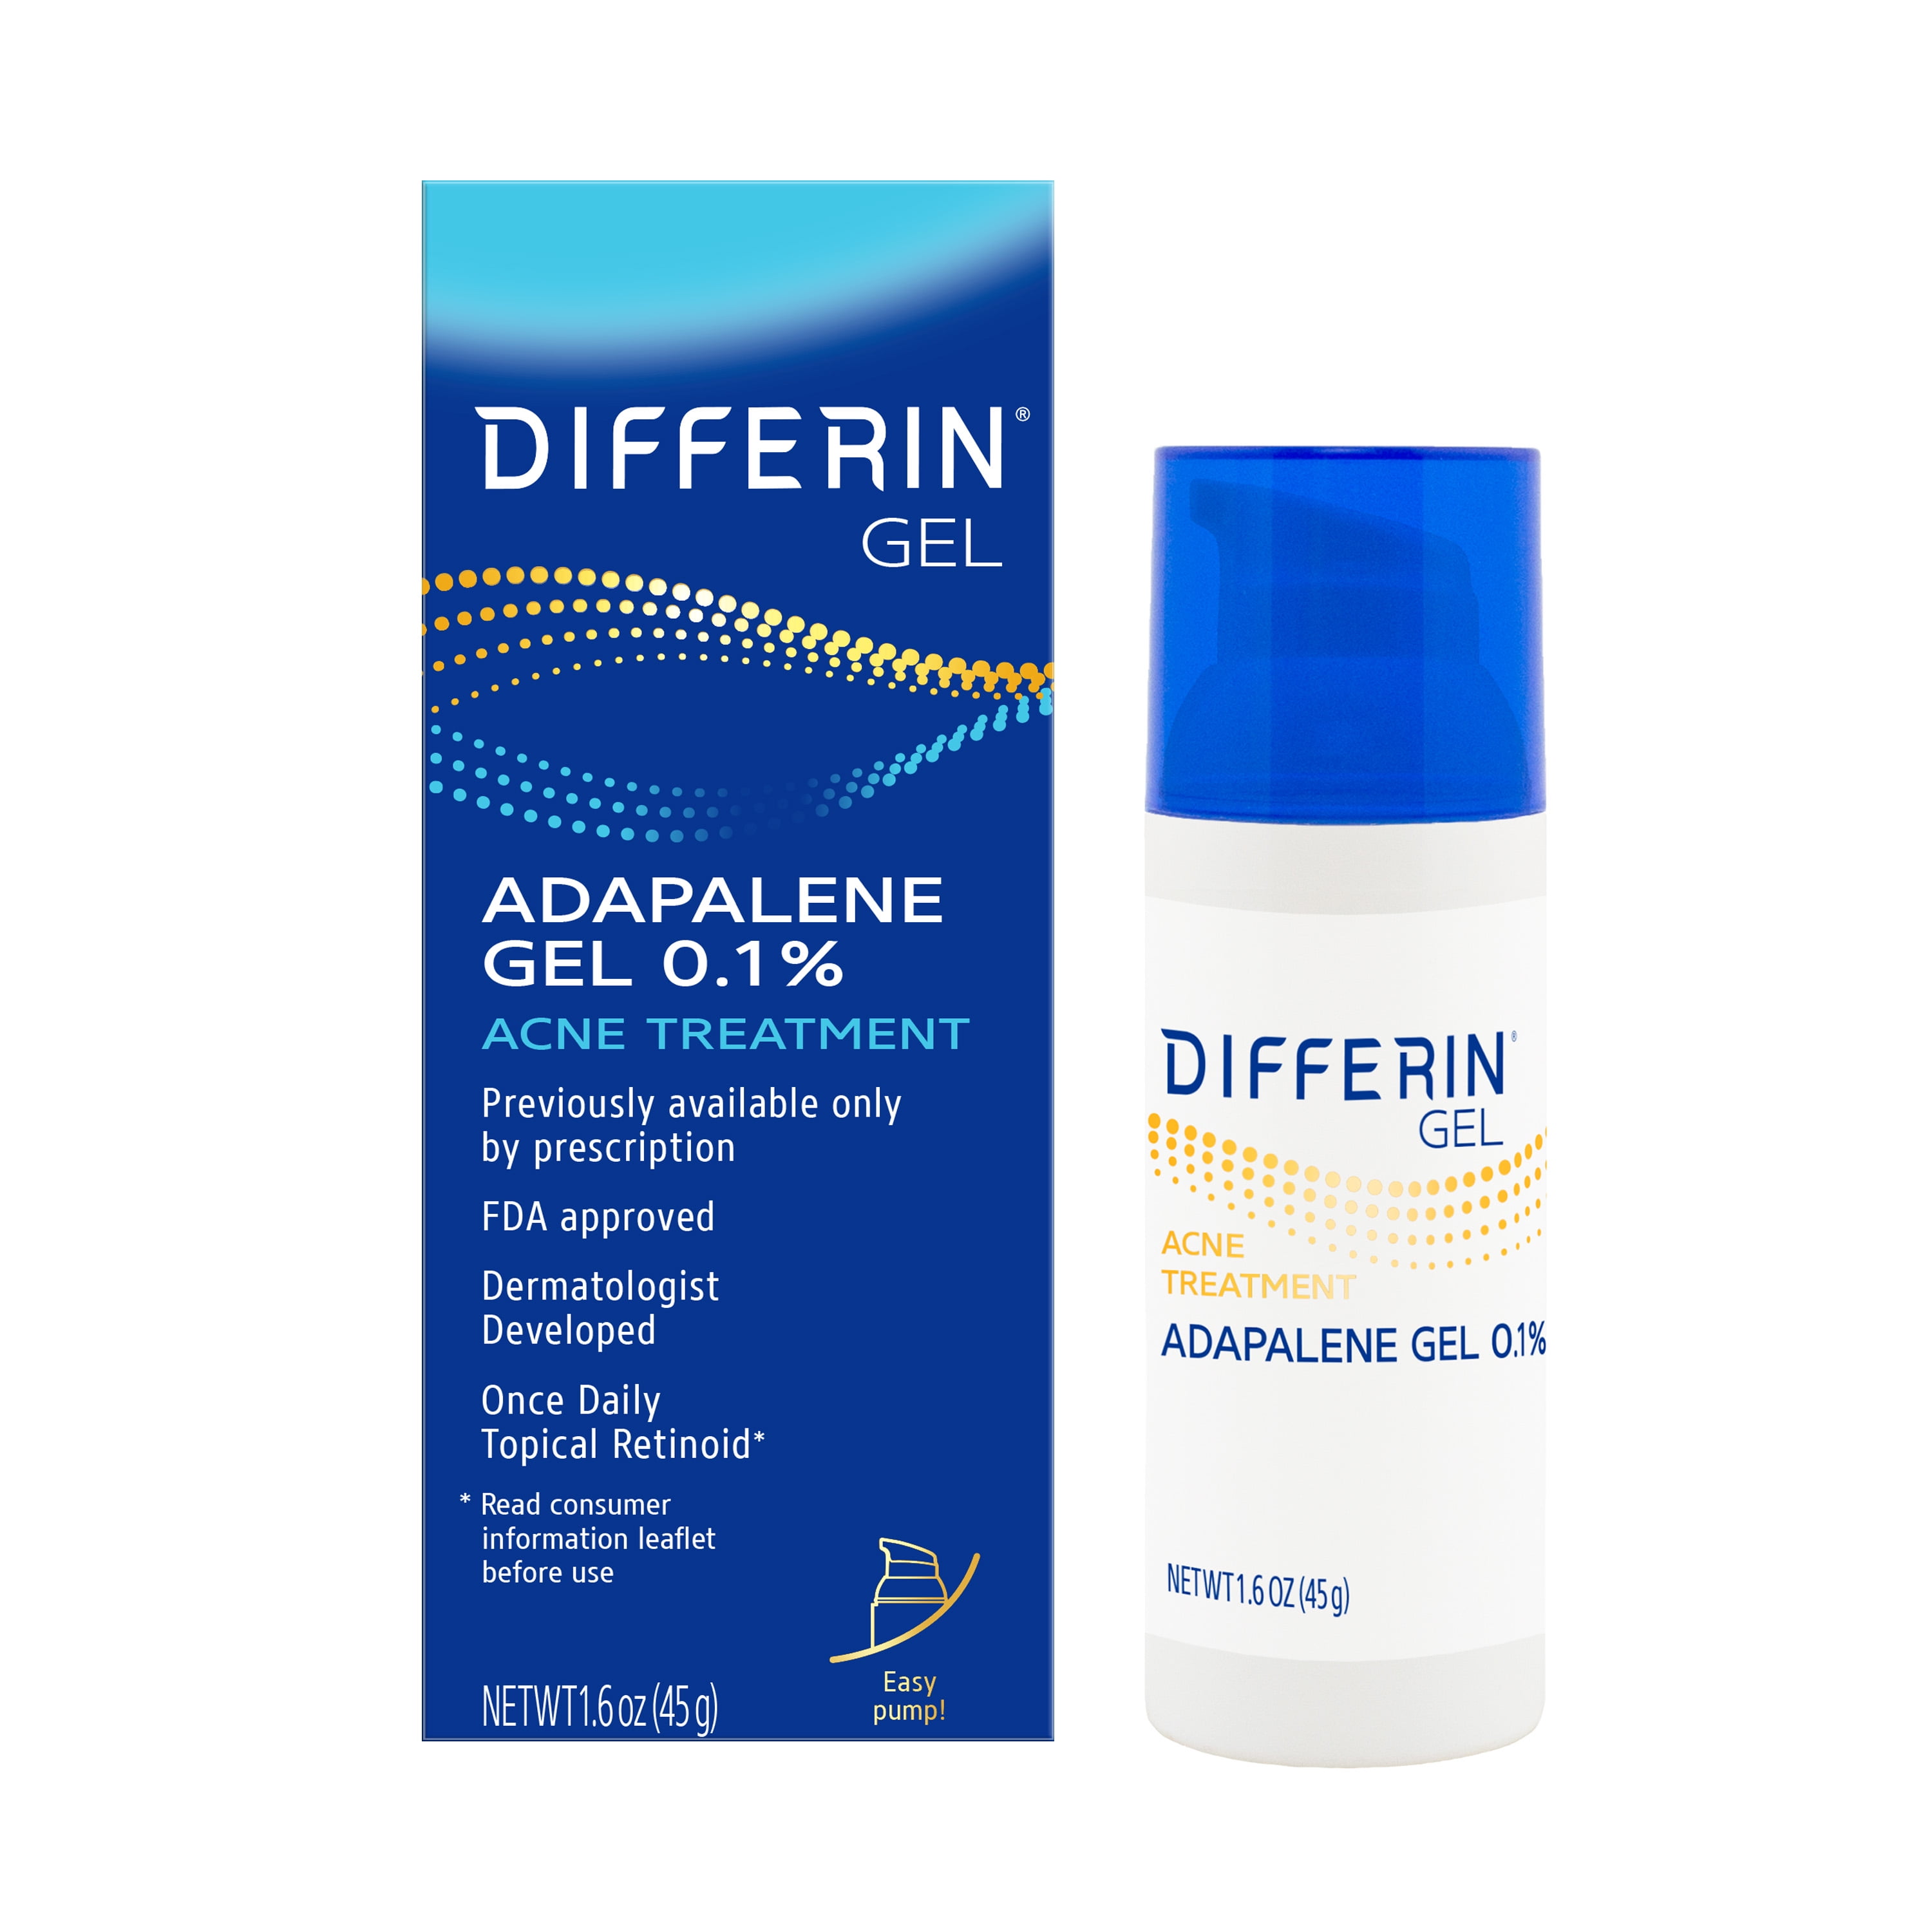 Differin Treatment Gel, Retinoid Treatment with 0.1% Adapalene, 1.6oz (45g) Tube Walmart.com